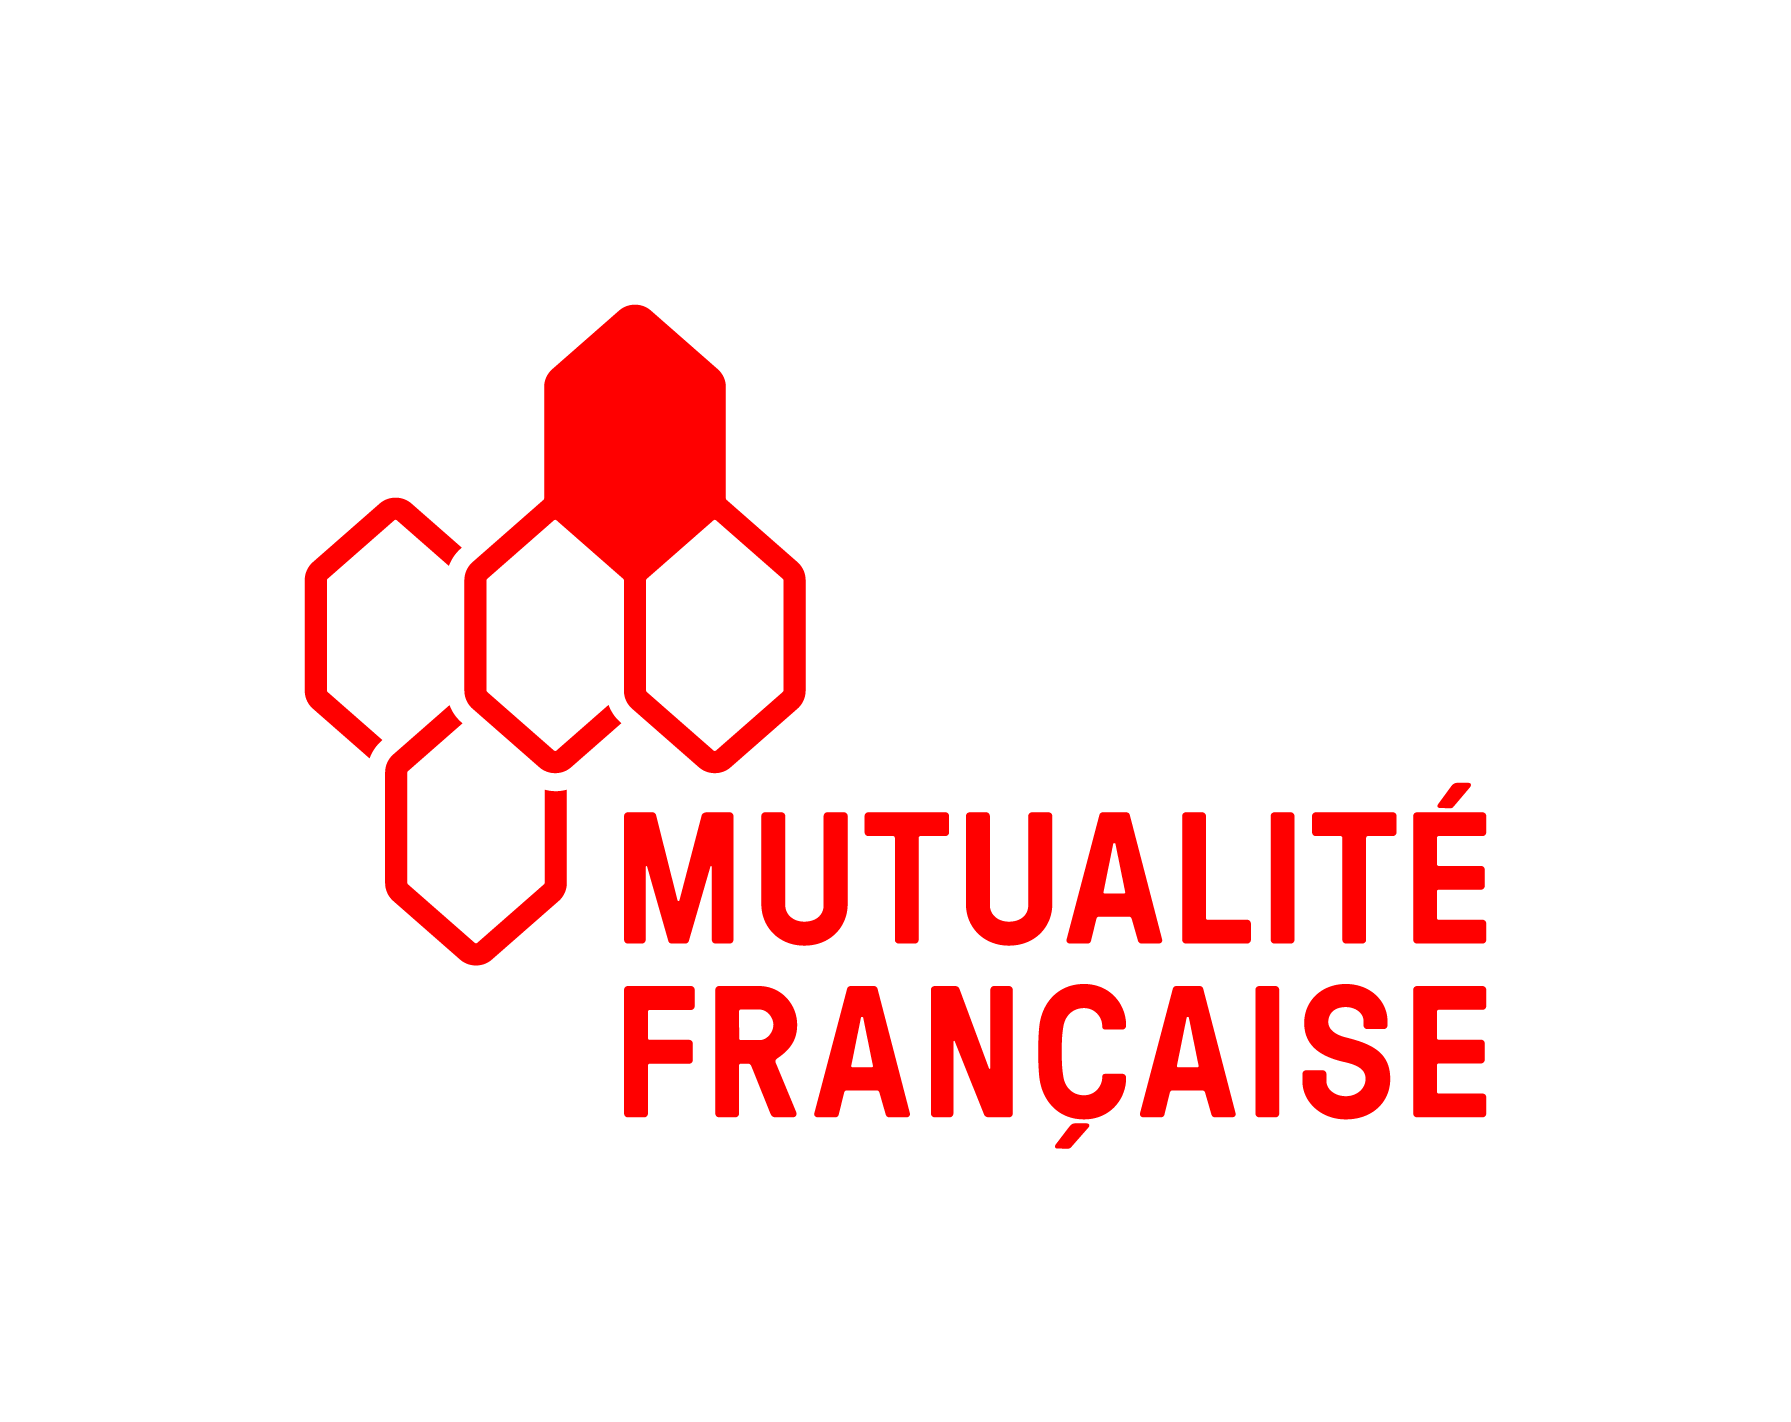 Mutualité-française logo